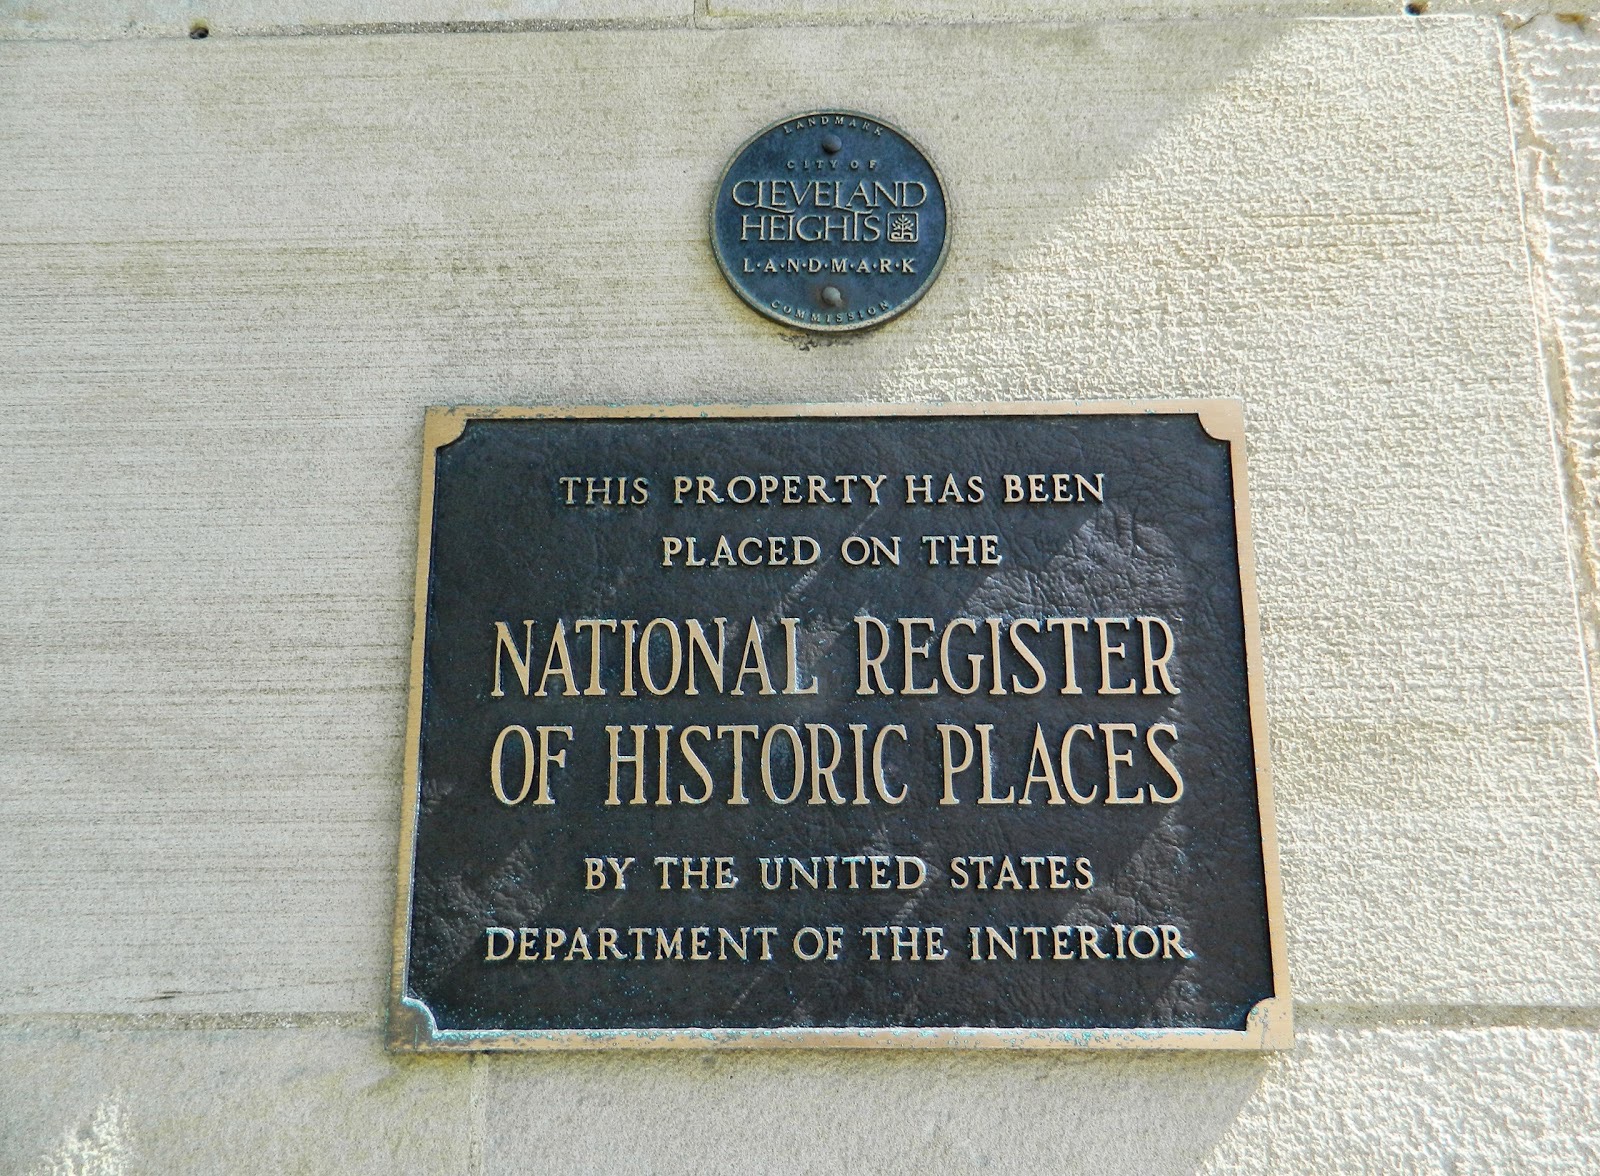 20130430012 Cleveland Hgts Heights Rockefeller Building historic landmark marker.jpg